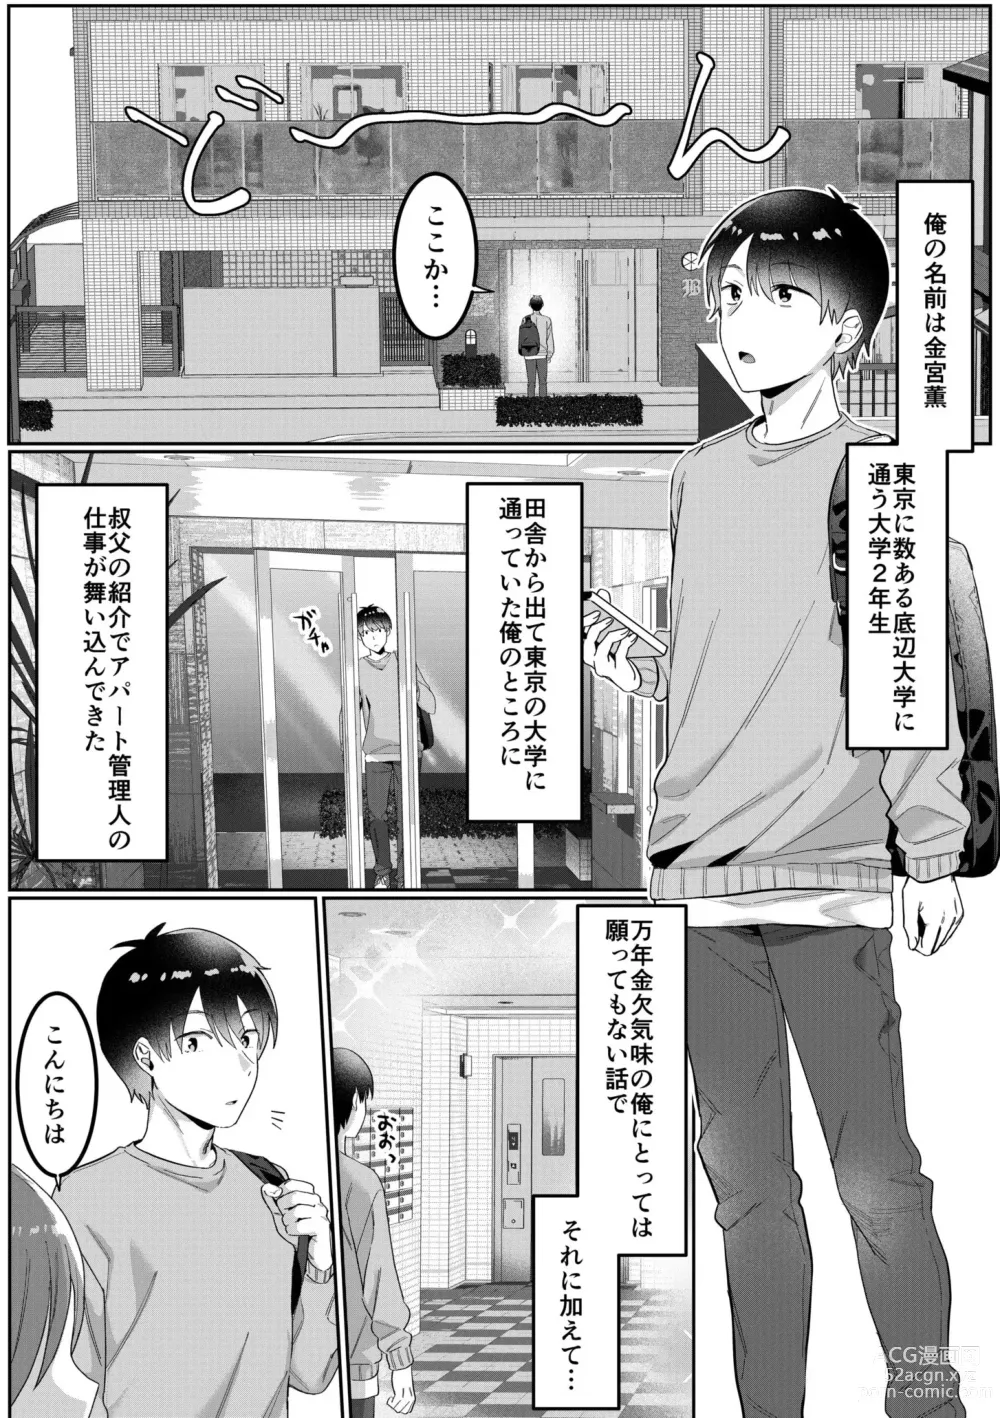 Page 3 of manga Single Mother House 01-02